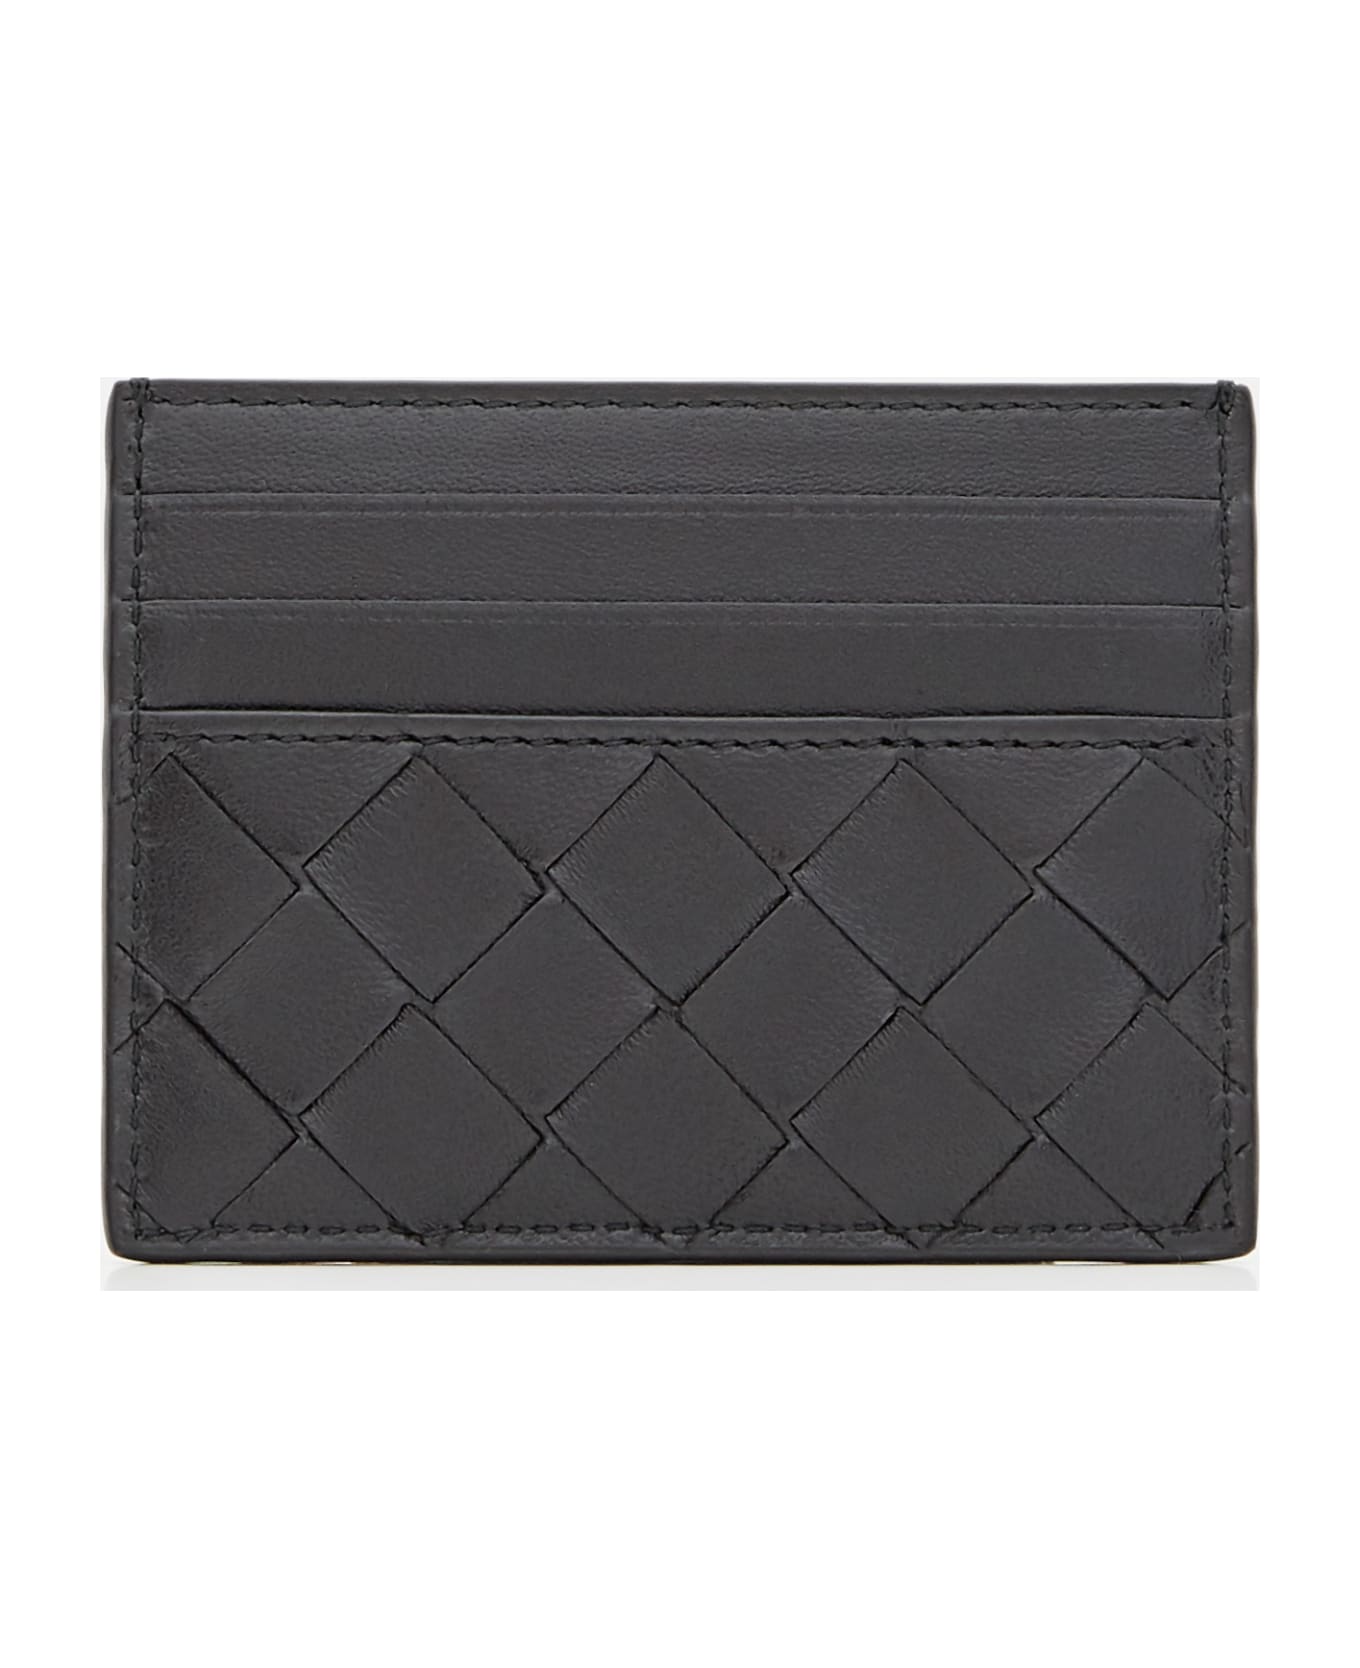 Bottega Veneta Leather Cardholder - Black